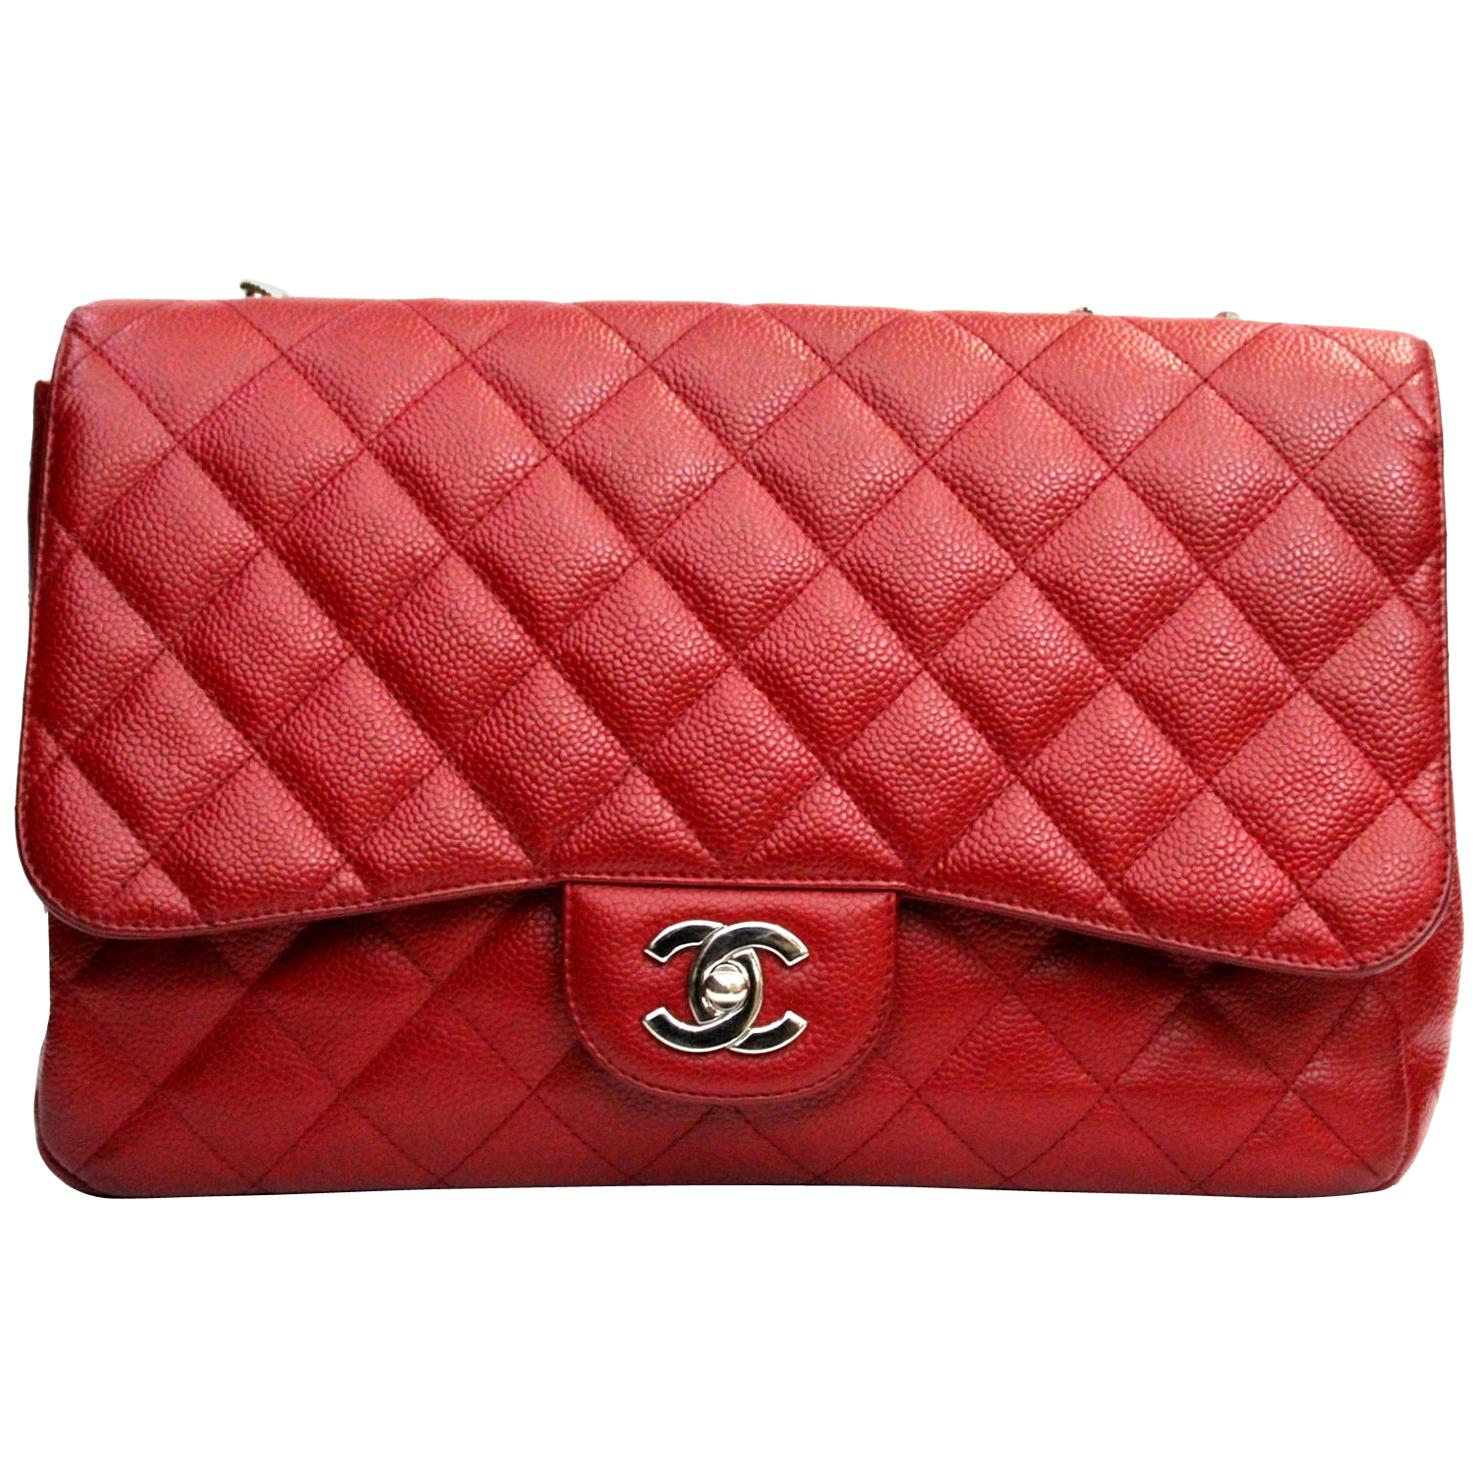 Chanel Red Caviar Leather Jumbo Flap Bag